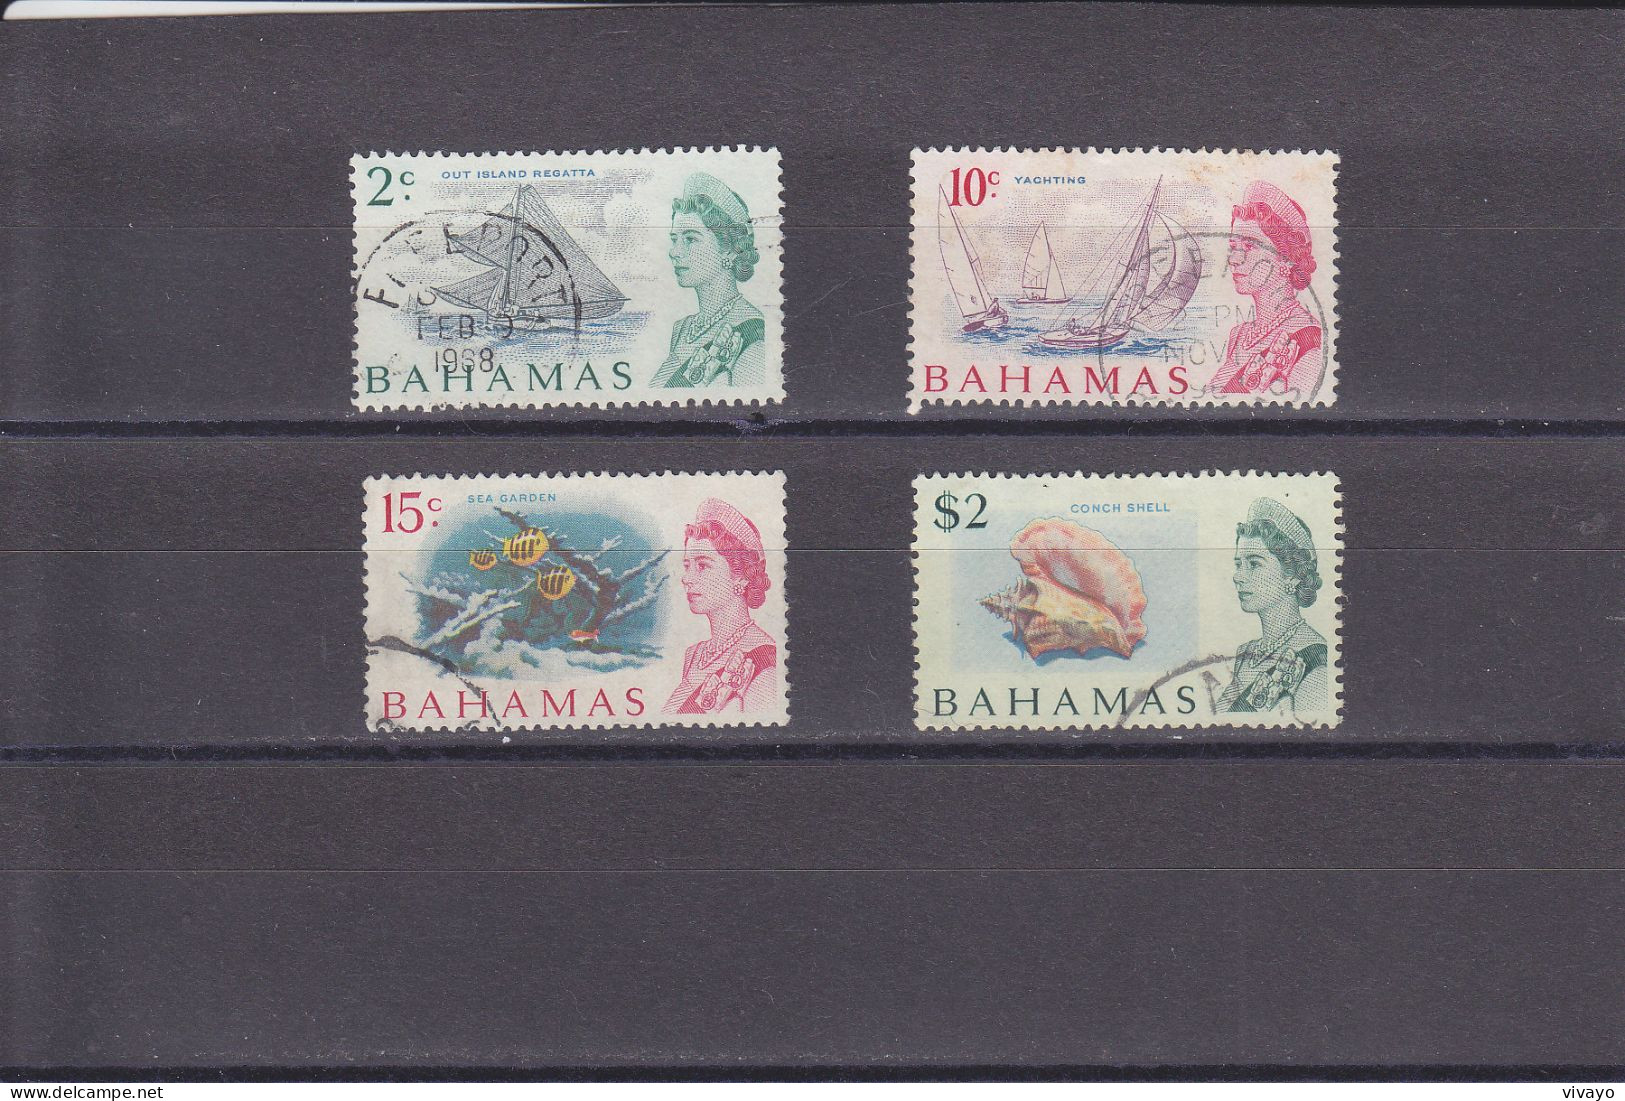 BAHAMAS - 1967 - O/FINE CANCELLED -  QEII & REGATTA, YACHTING, SEA GARDEN, SHELL  Yv. 242, 247, 250, 254 - 1963-1973 Autonomía Interna